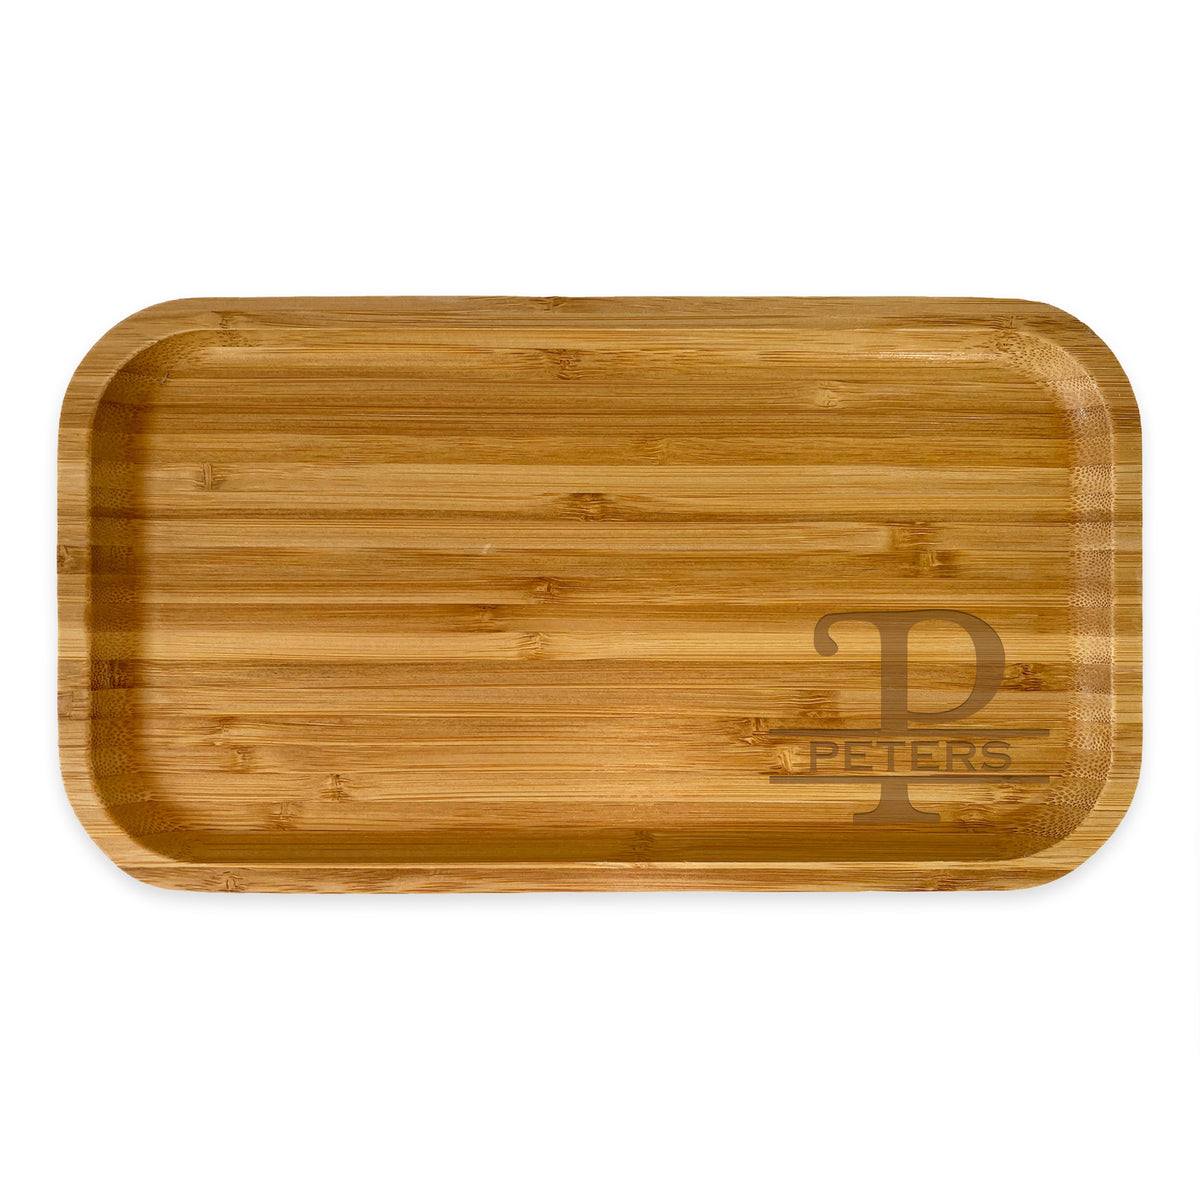 Personalized monogram bamboo tray / Laser engraved